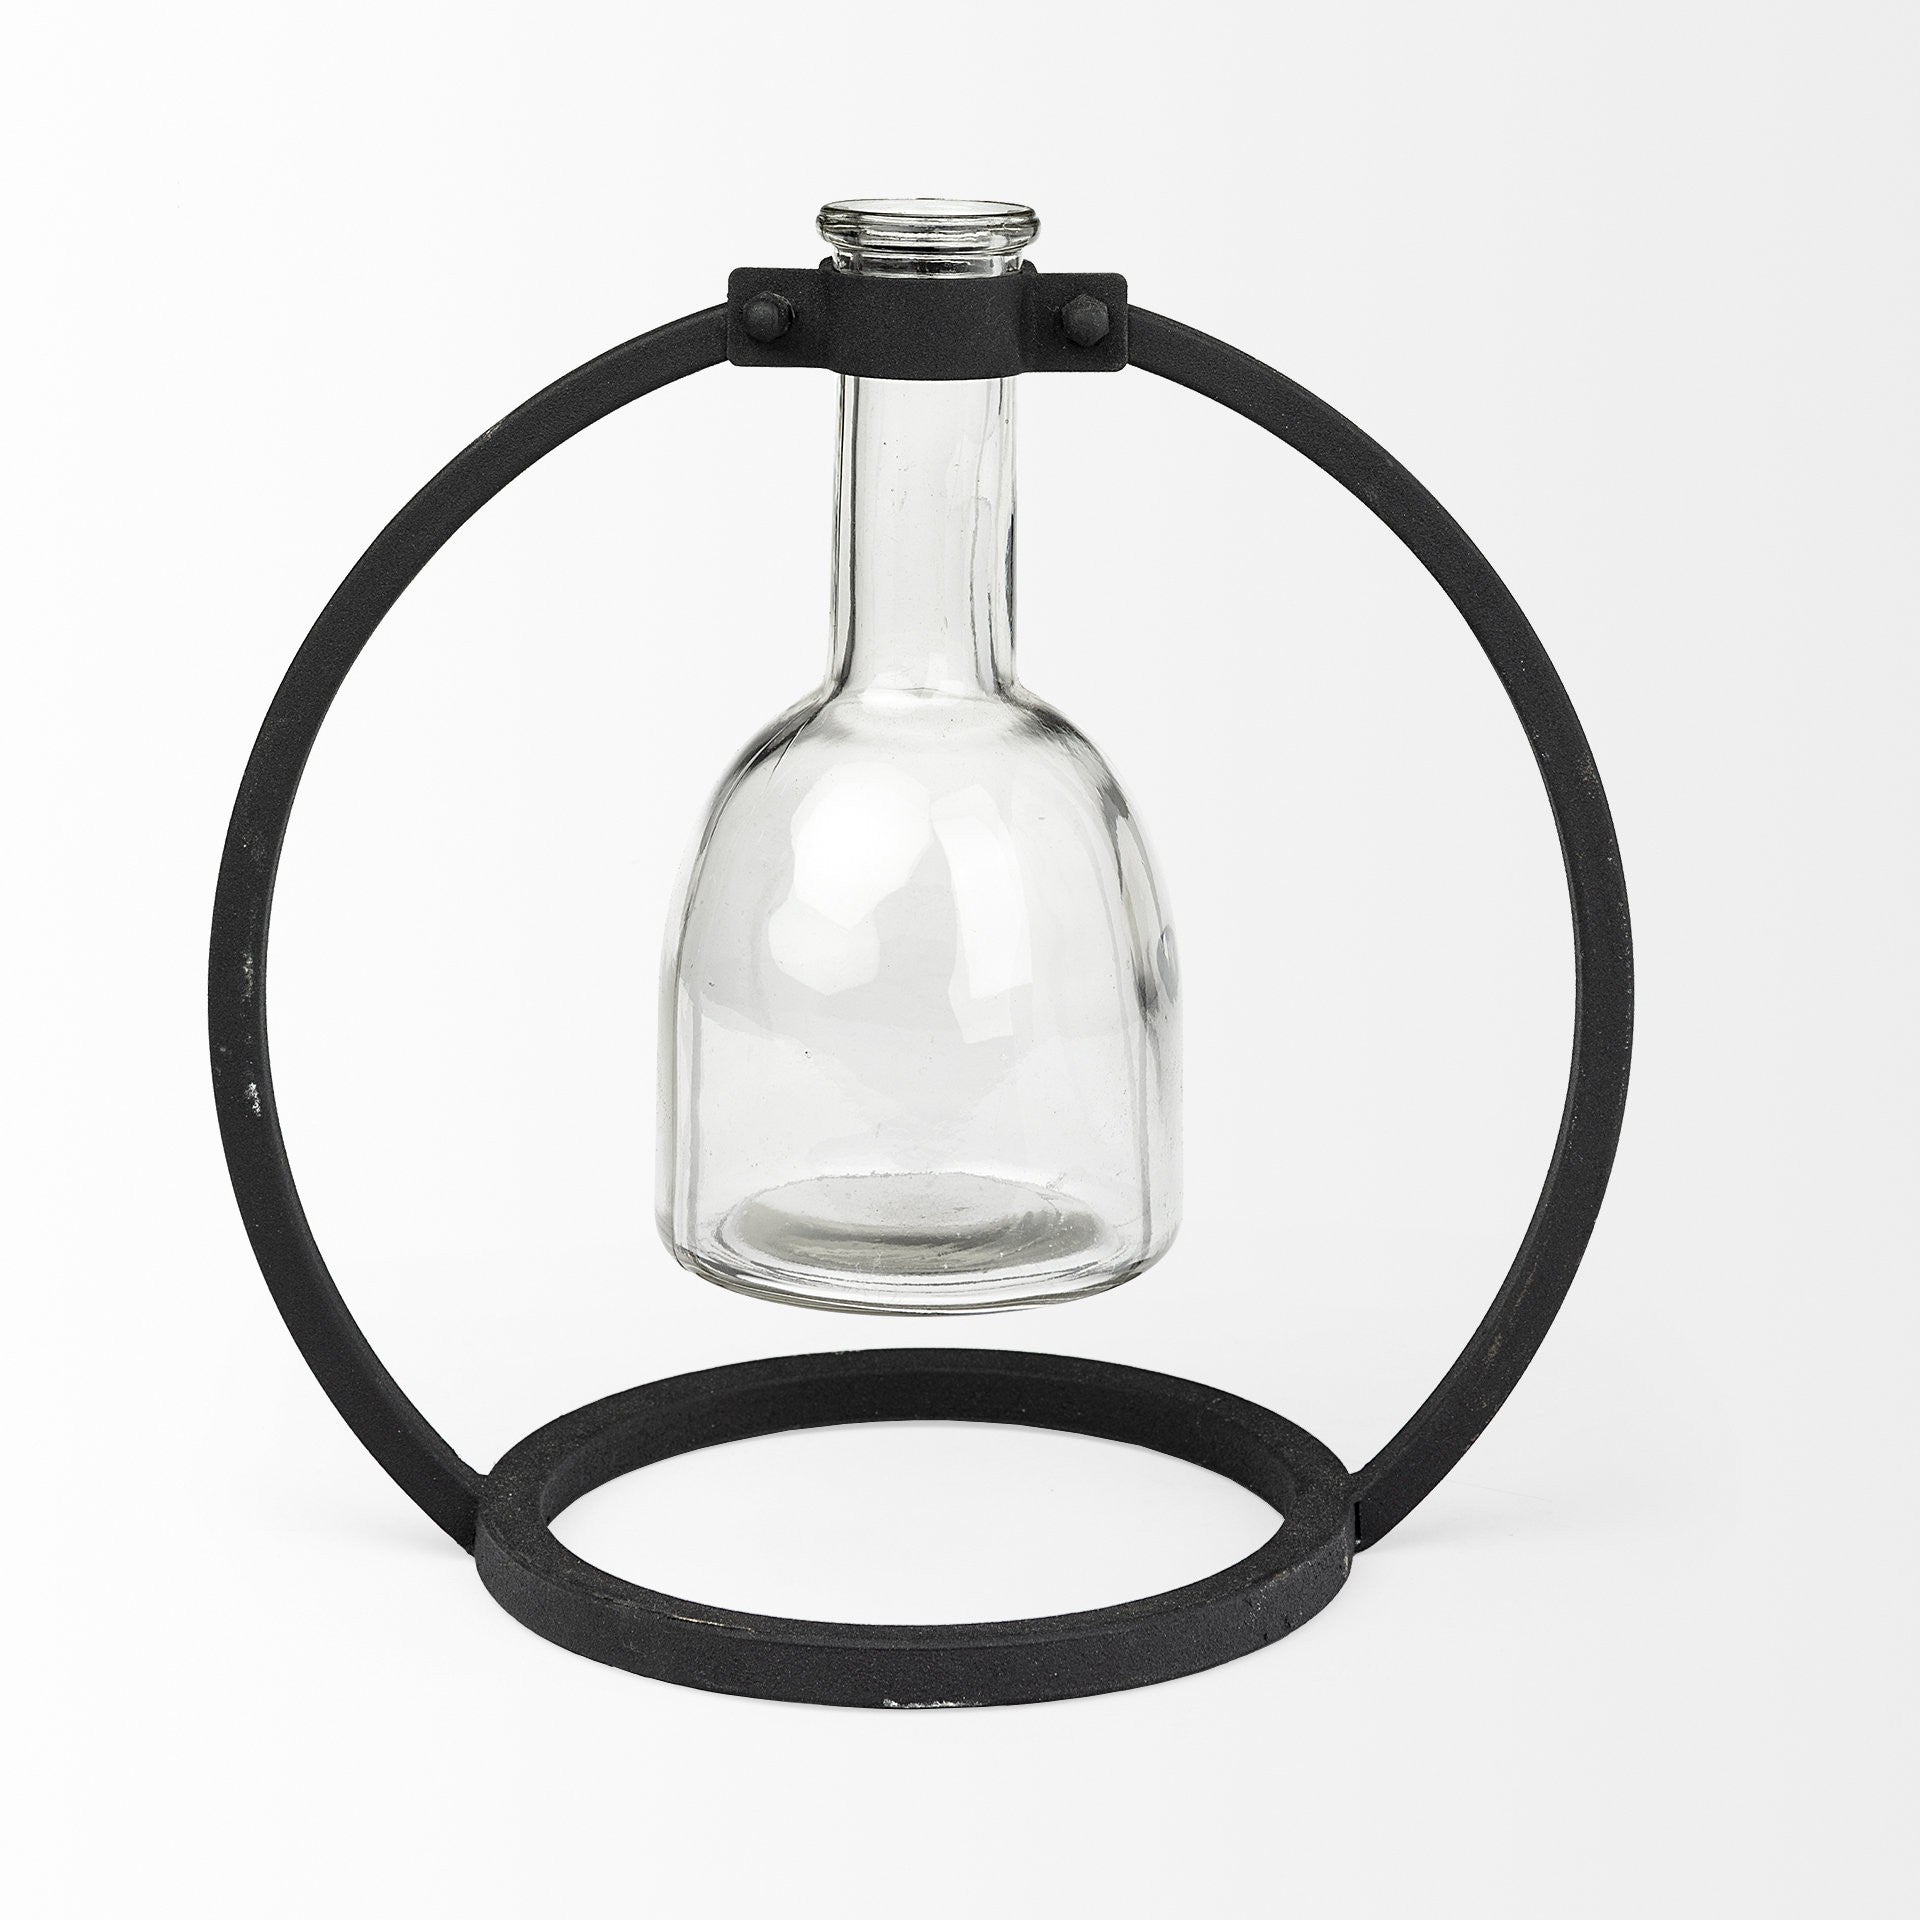 Modern Industrial Black Round Metal and Glass Vase